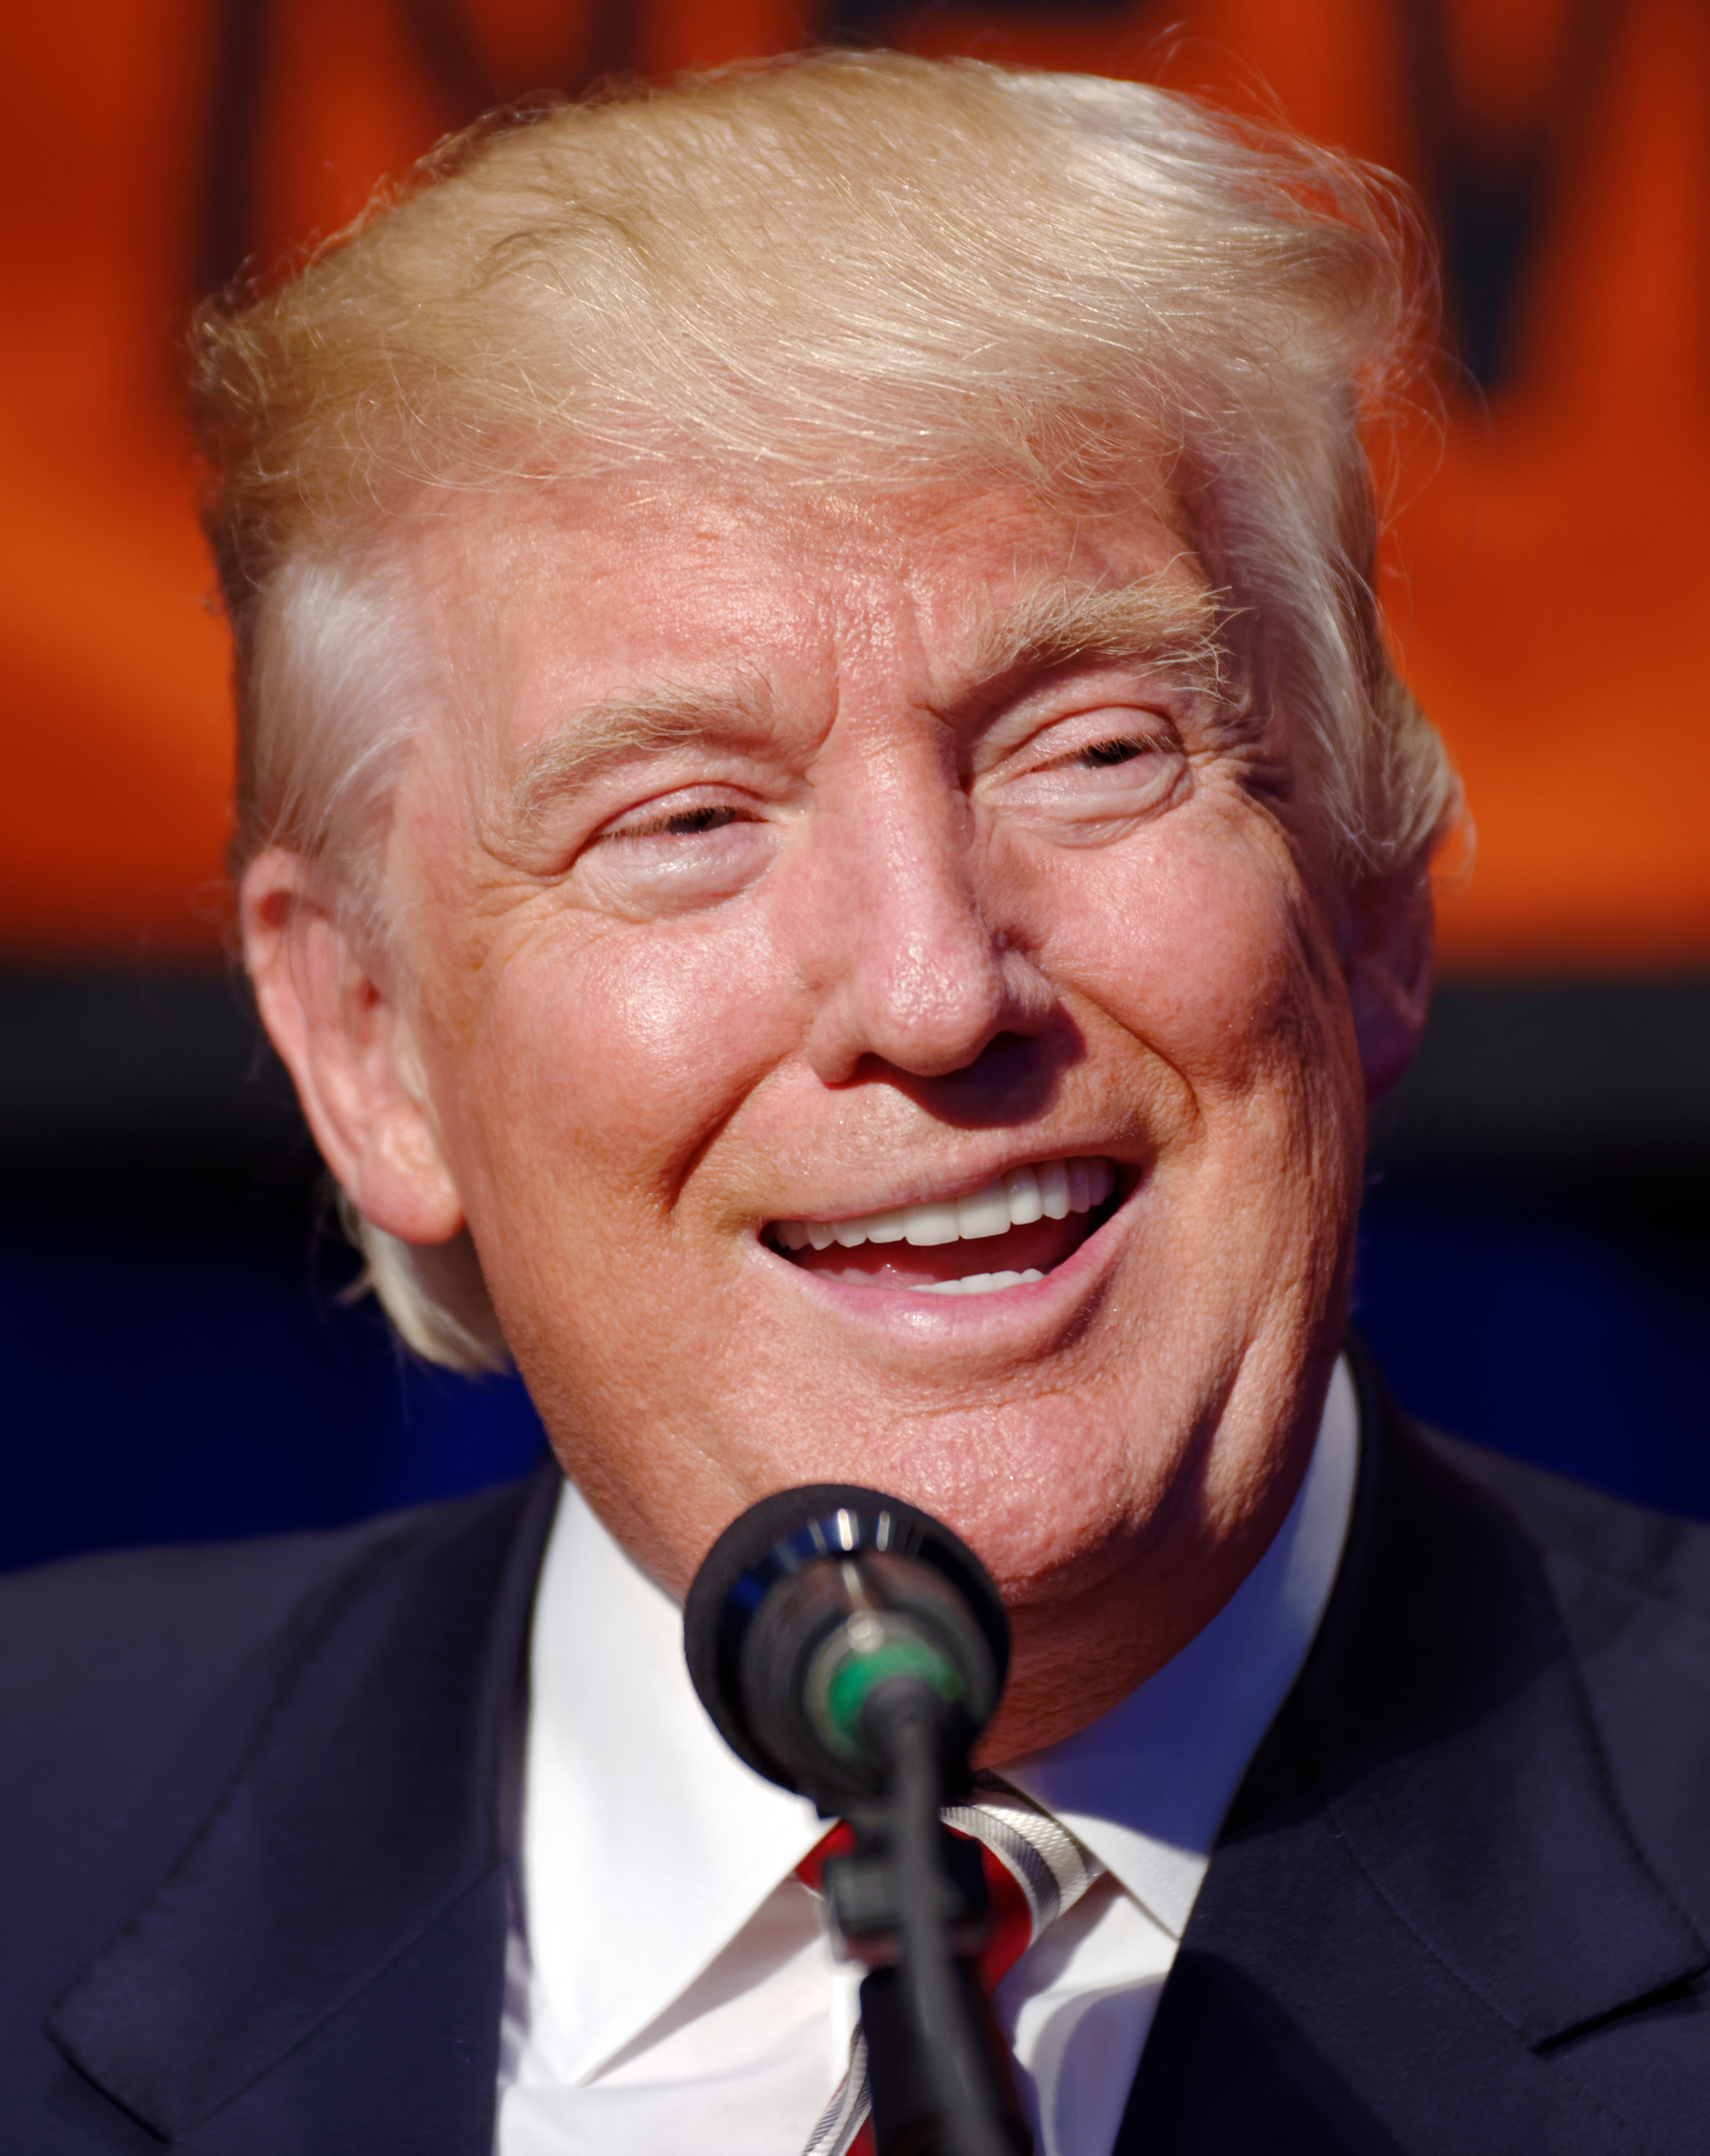 Donald Trump | Photo Credit WikiMedia Commons